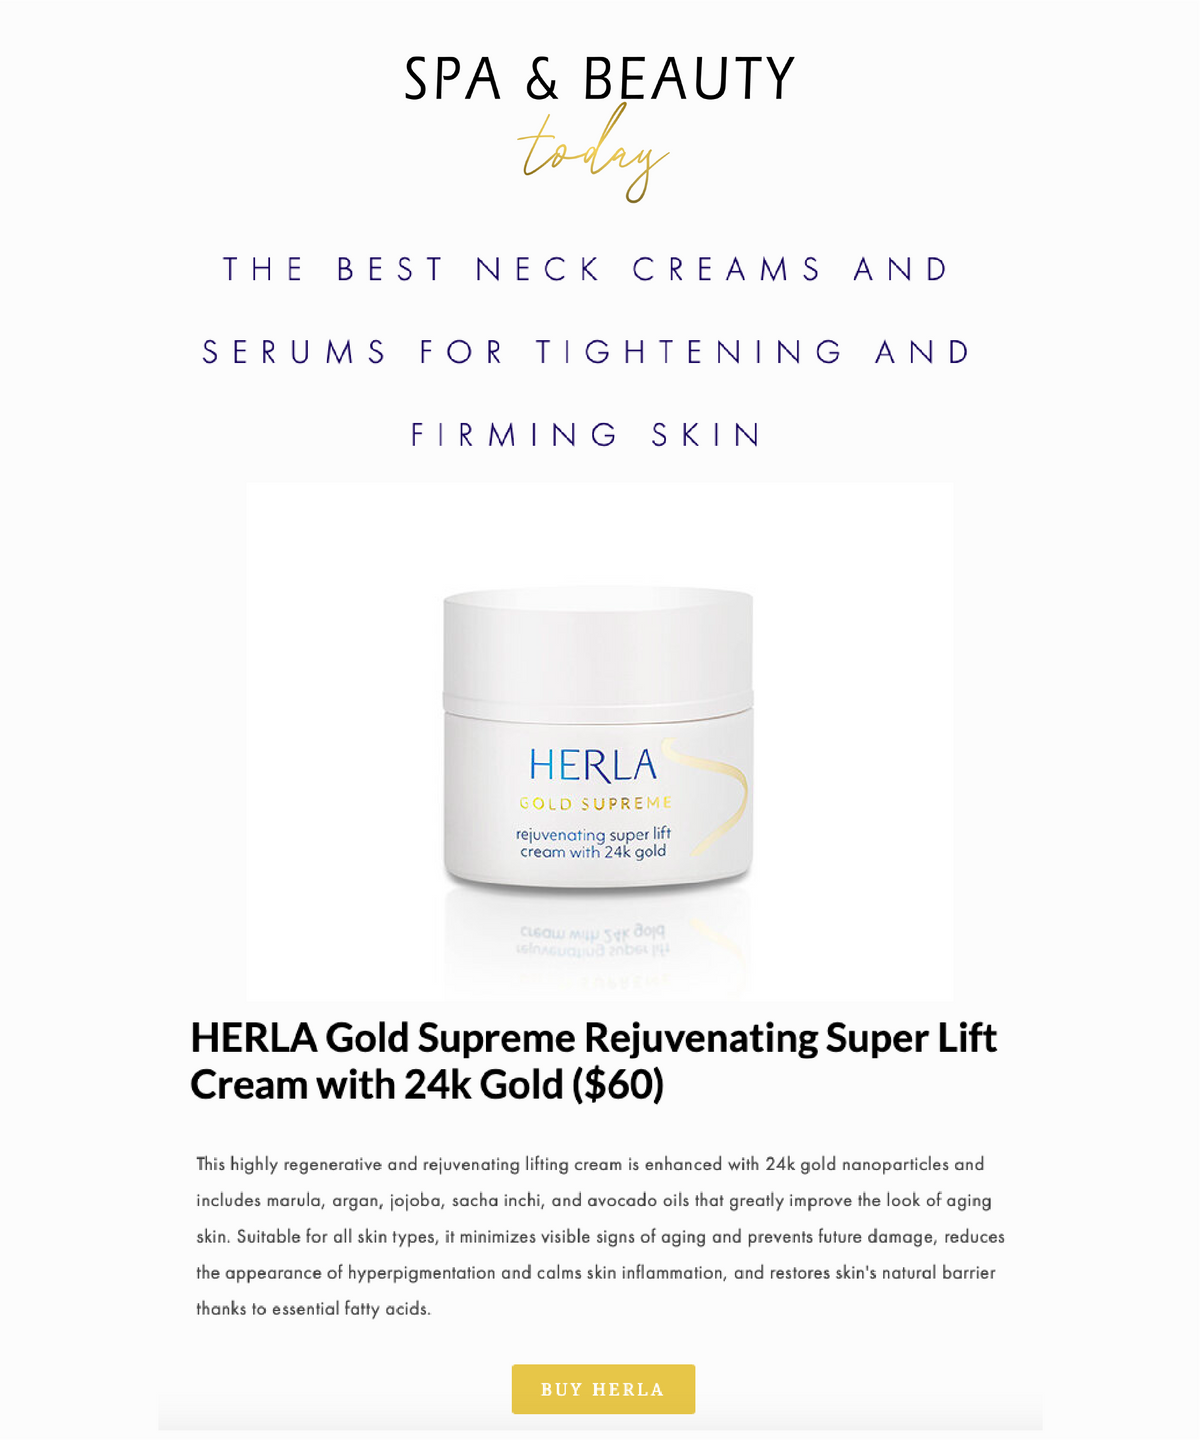 rejuvenating super lift cream with 24k gold